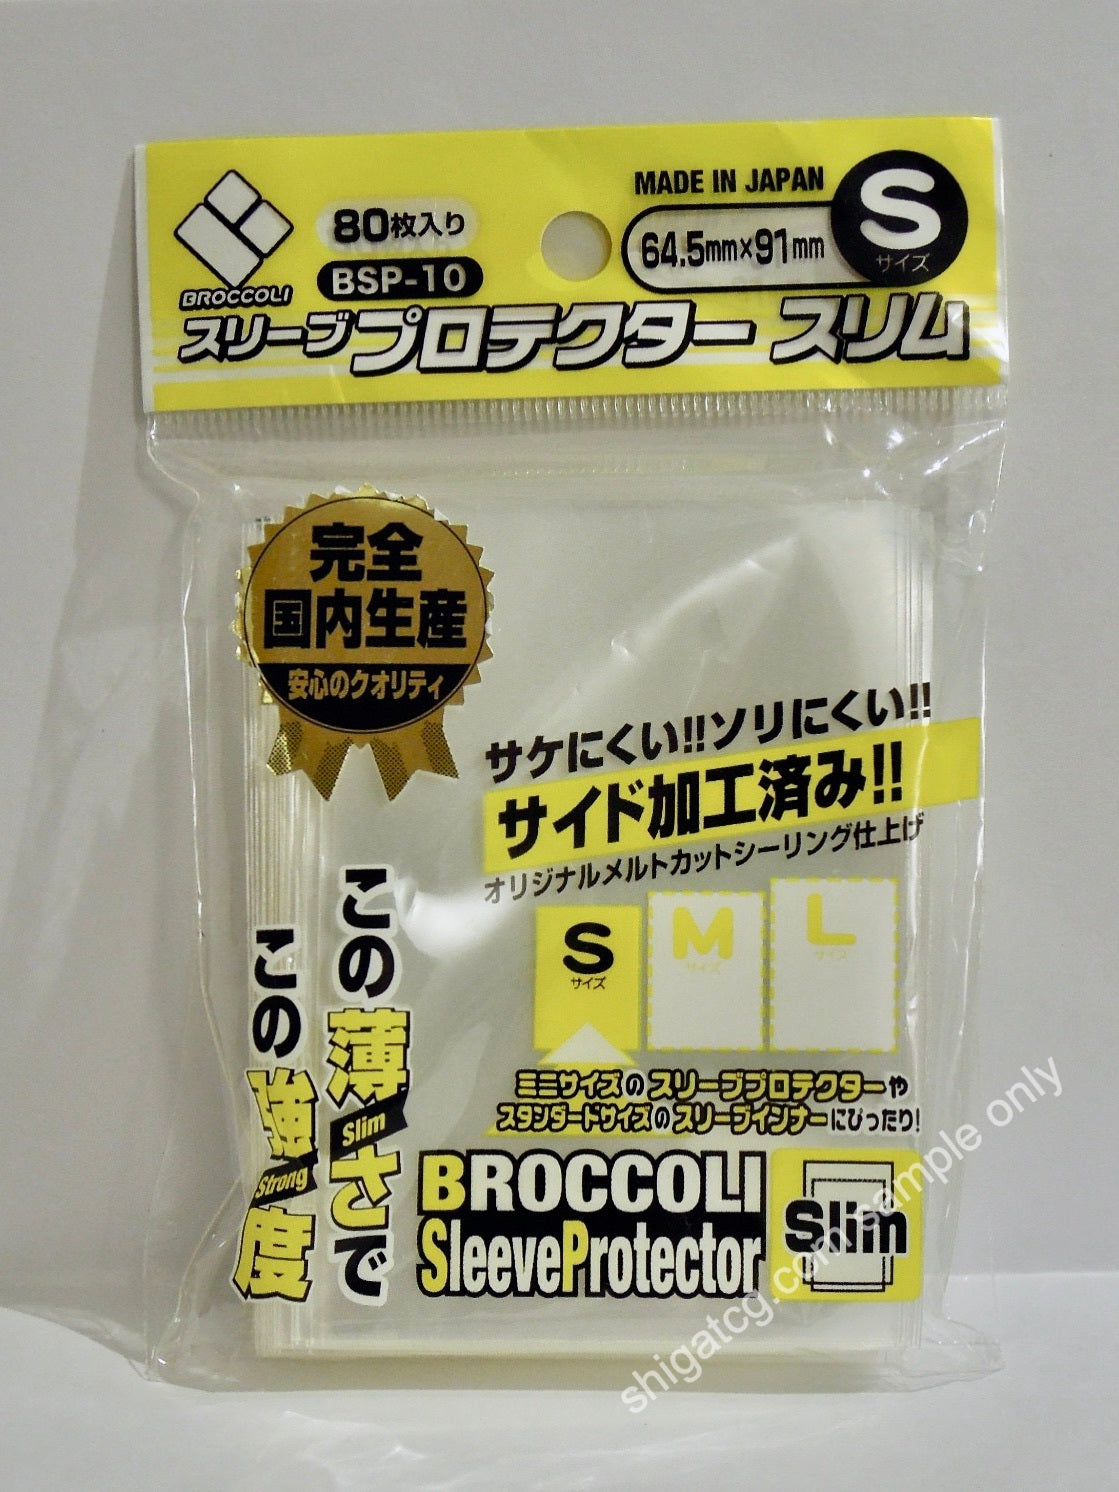 Broccoli TCG卡套 BSP-10 S 64.5 x 91 mm 輕薄強韌 卡套保護套